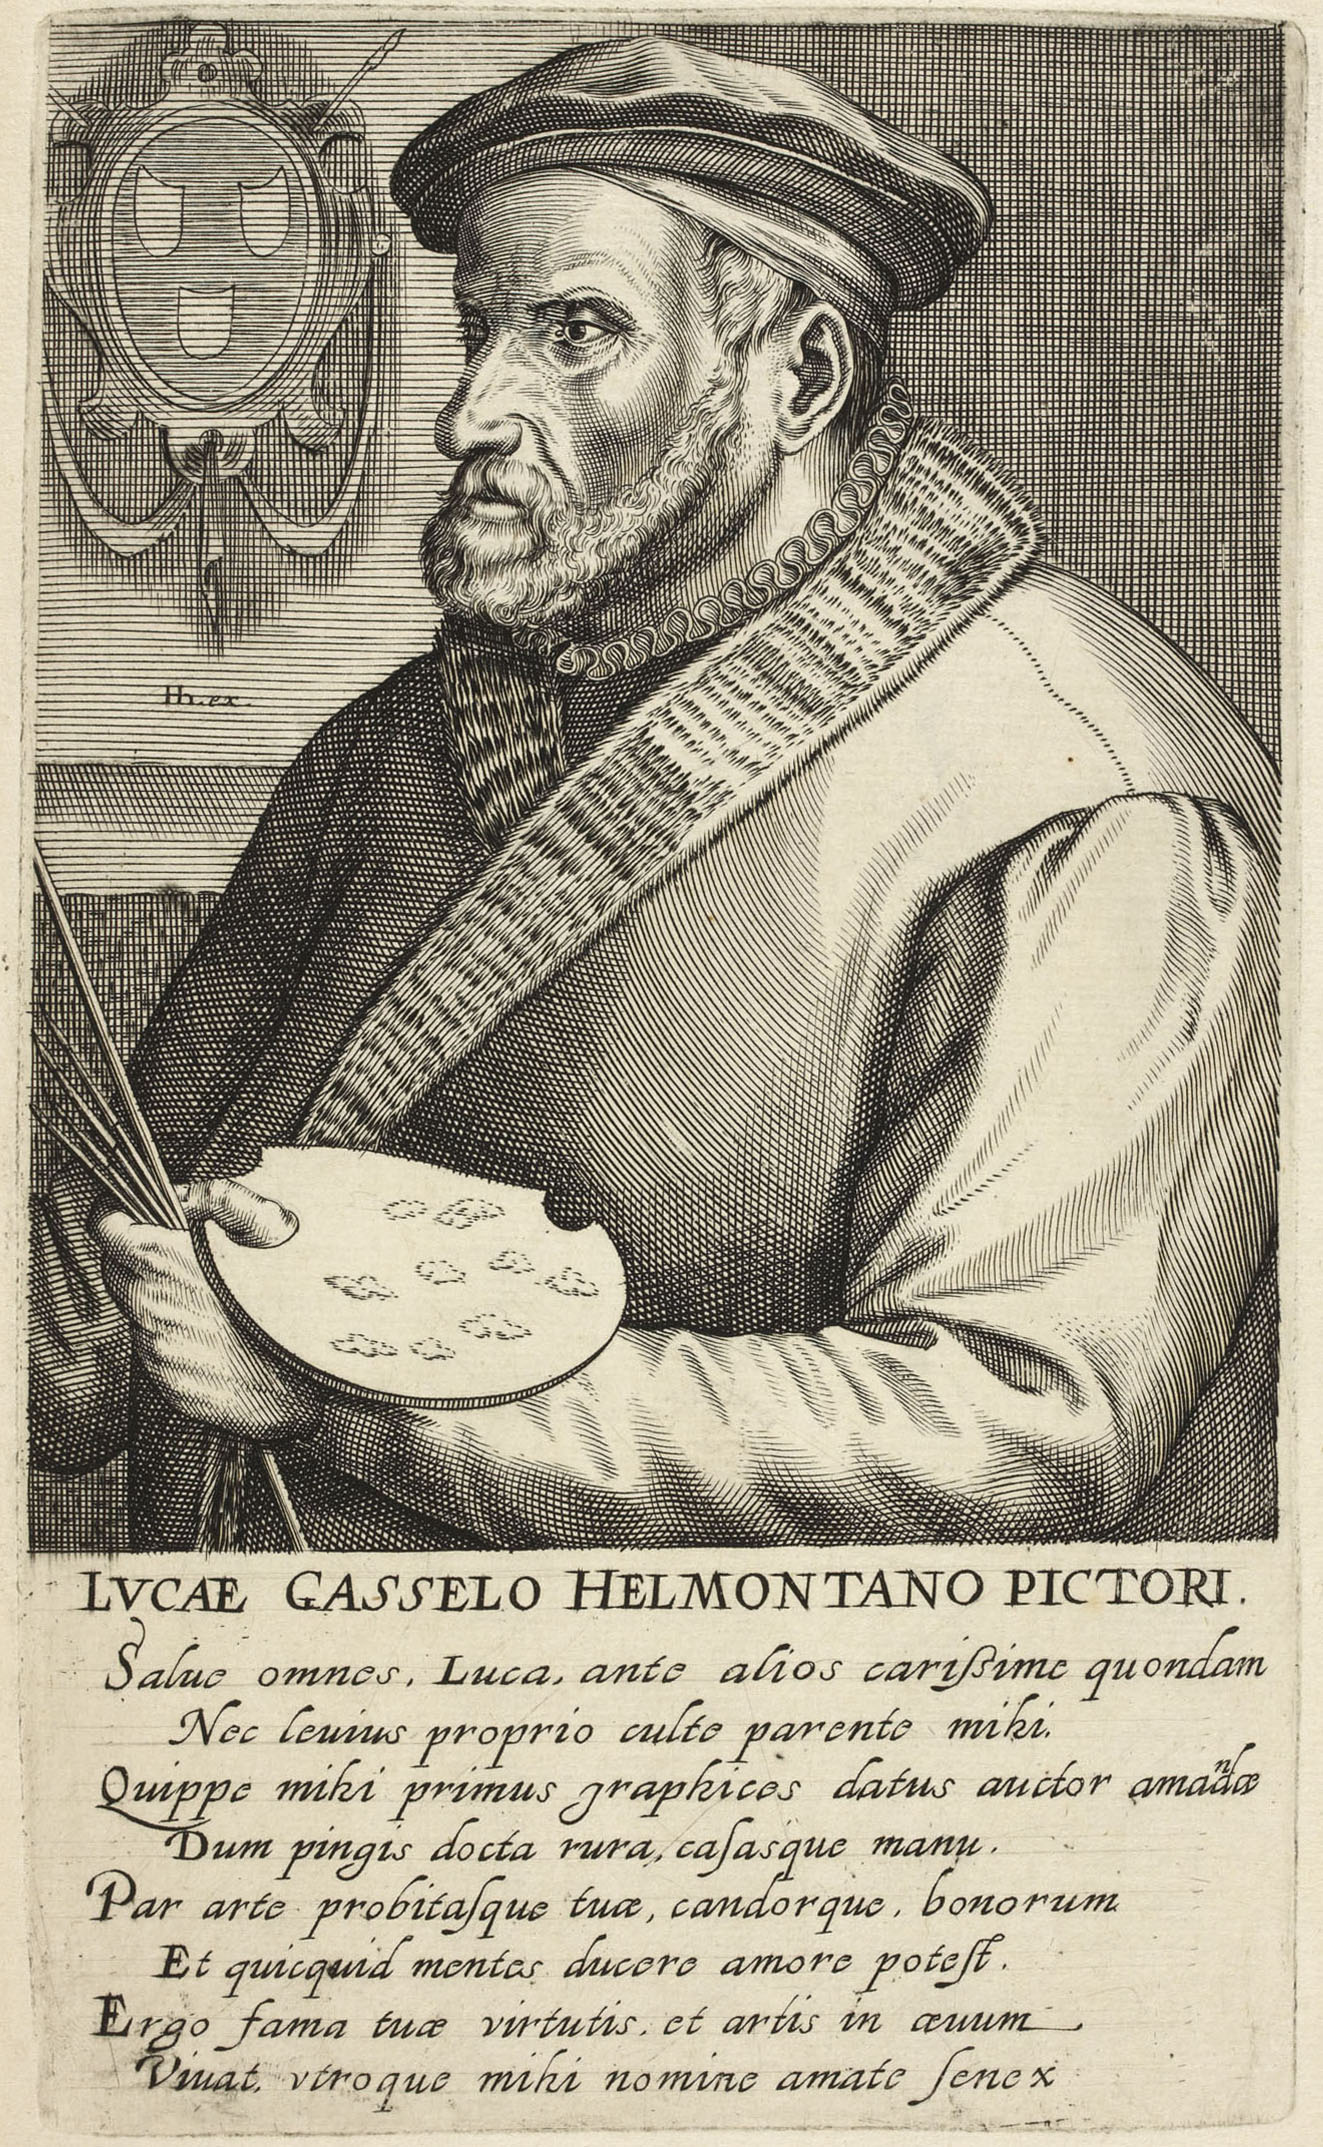 engraving of Lucas Gassel